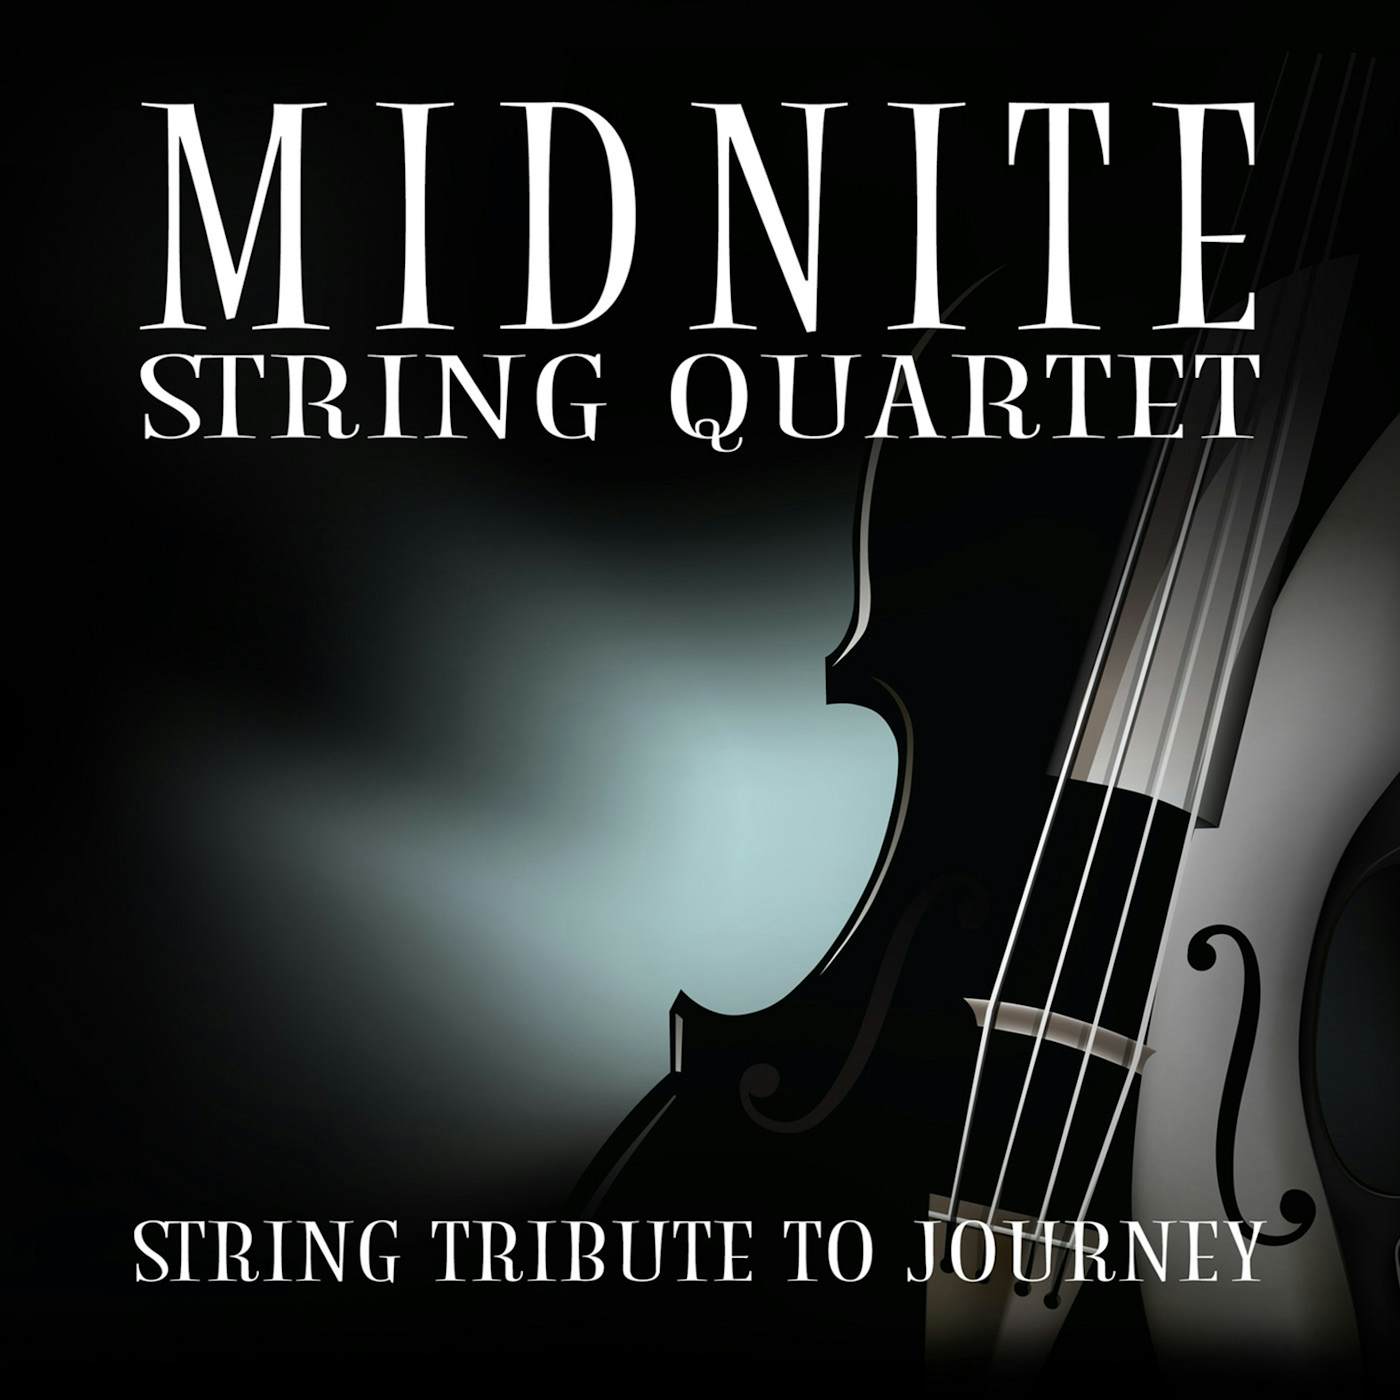 Midnite String Quartet PERFORMS JOURNEY (MOD) CD